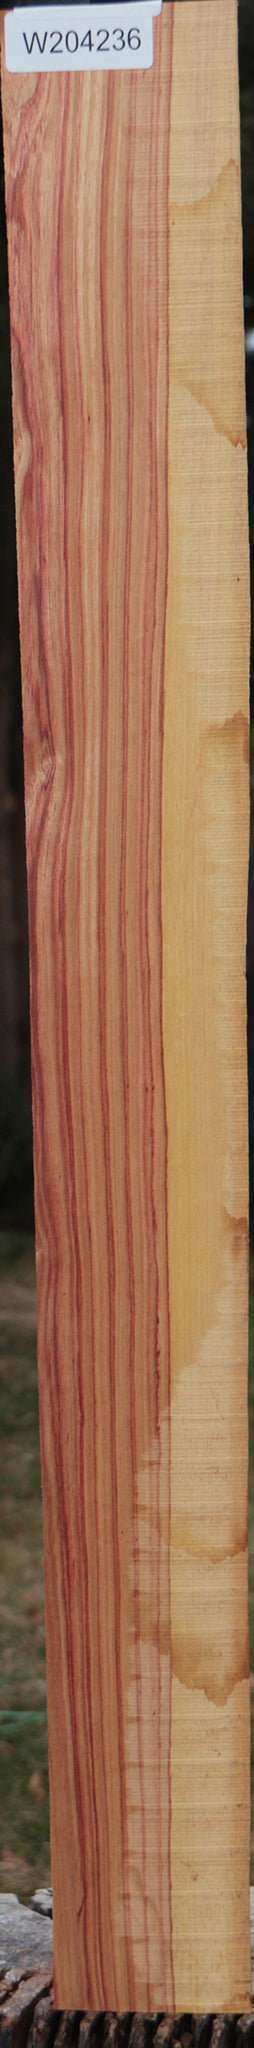 Tulipwood Live Edge Micro Lumber